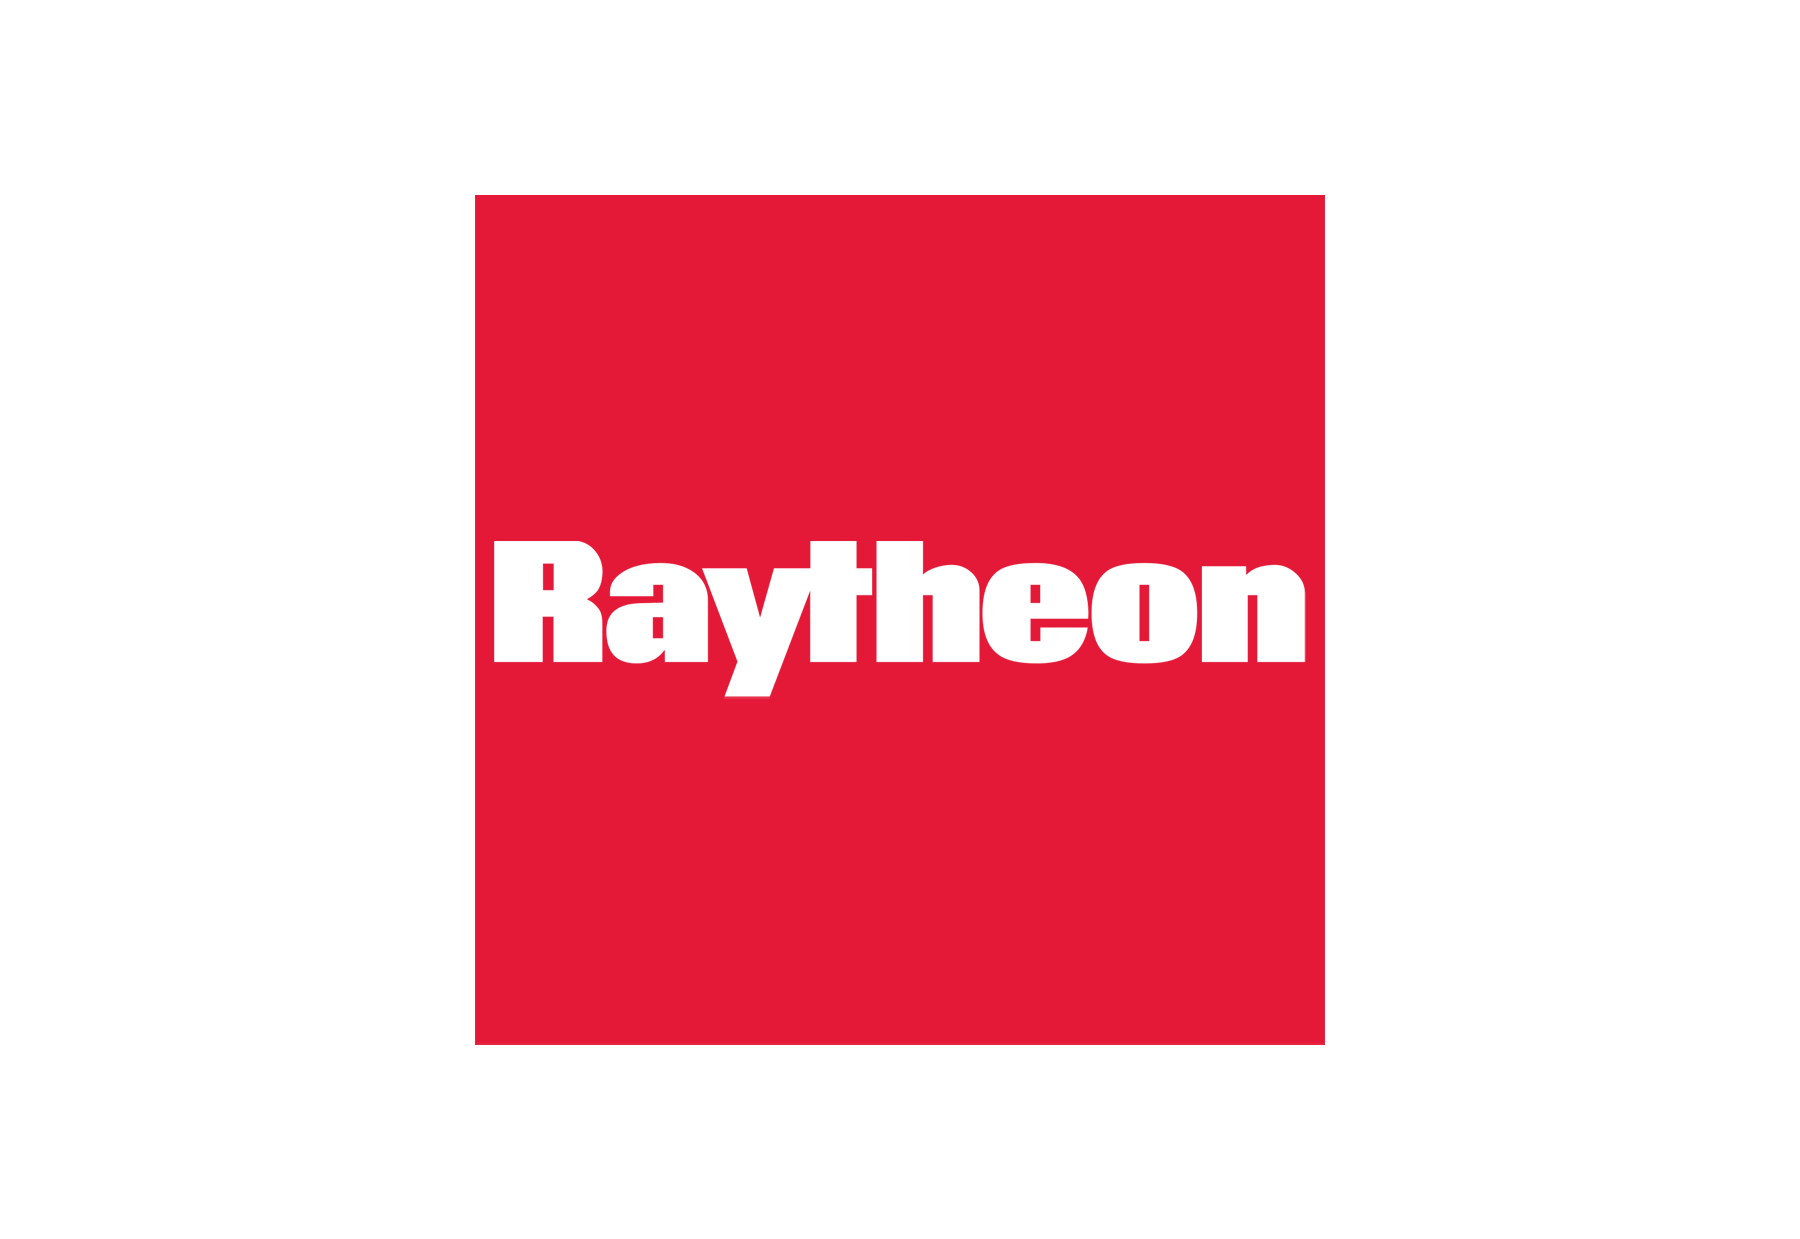 Raytheon Logo - Raytheon logo | Dwglogo